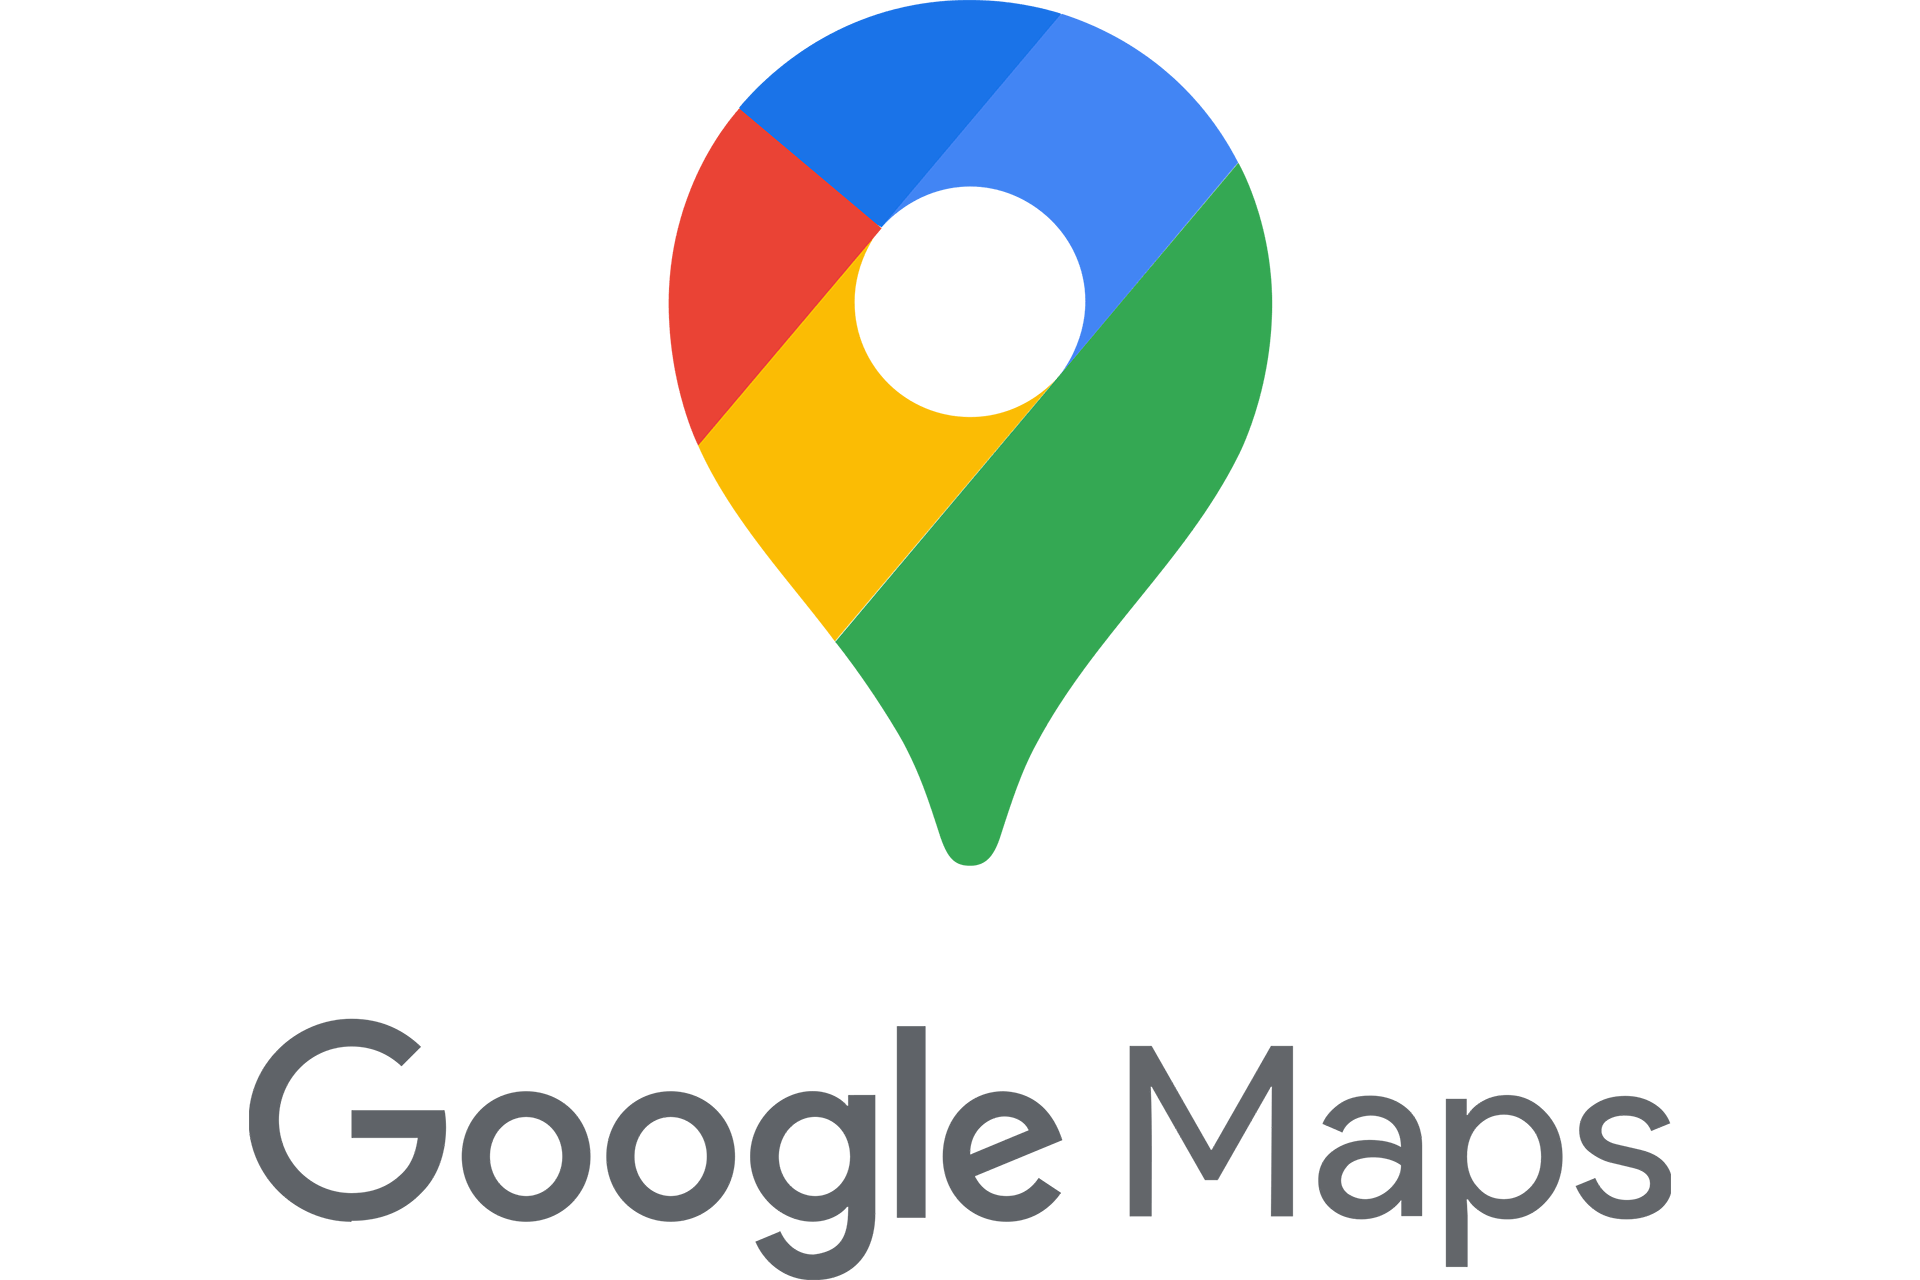 ASP.NET and Google Maps